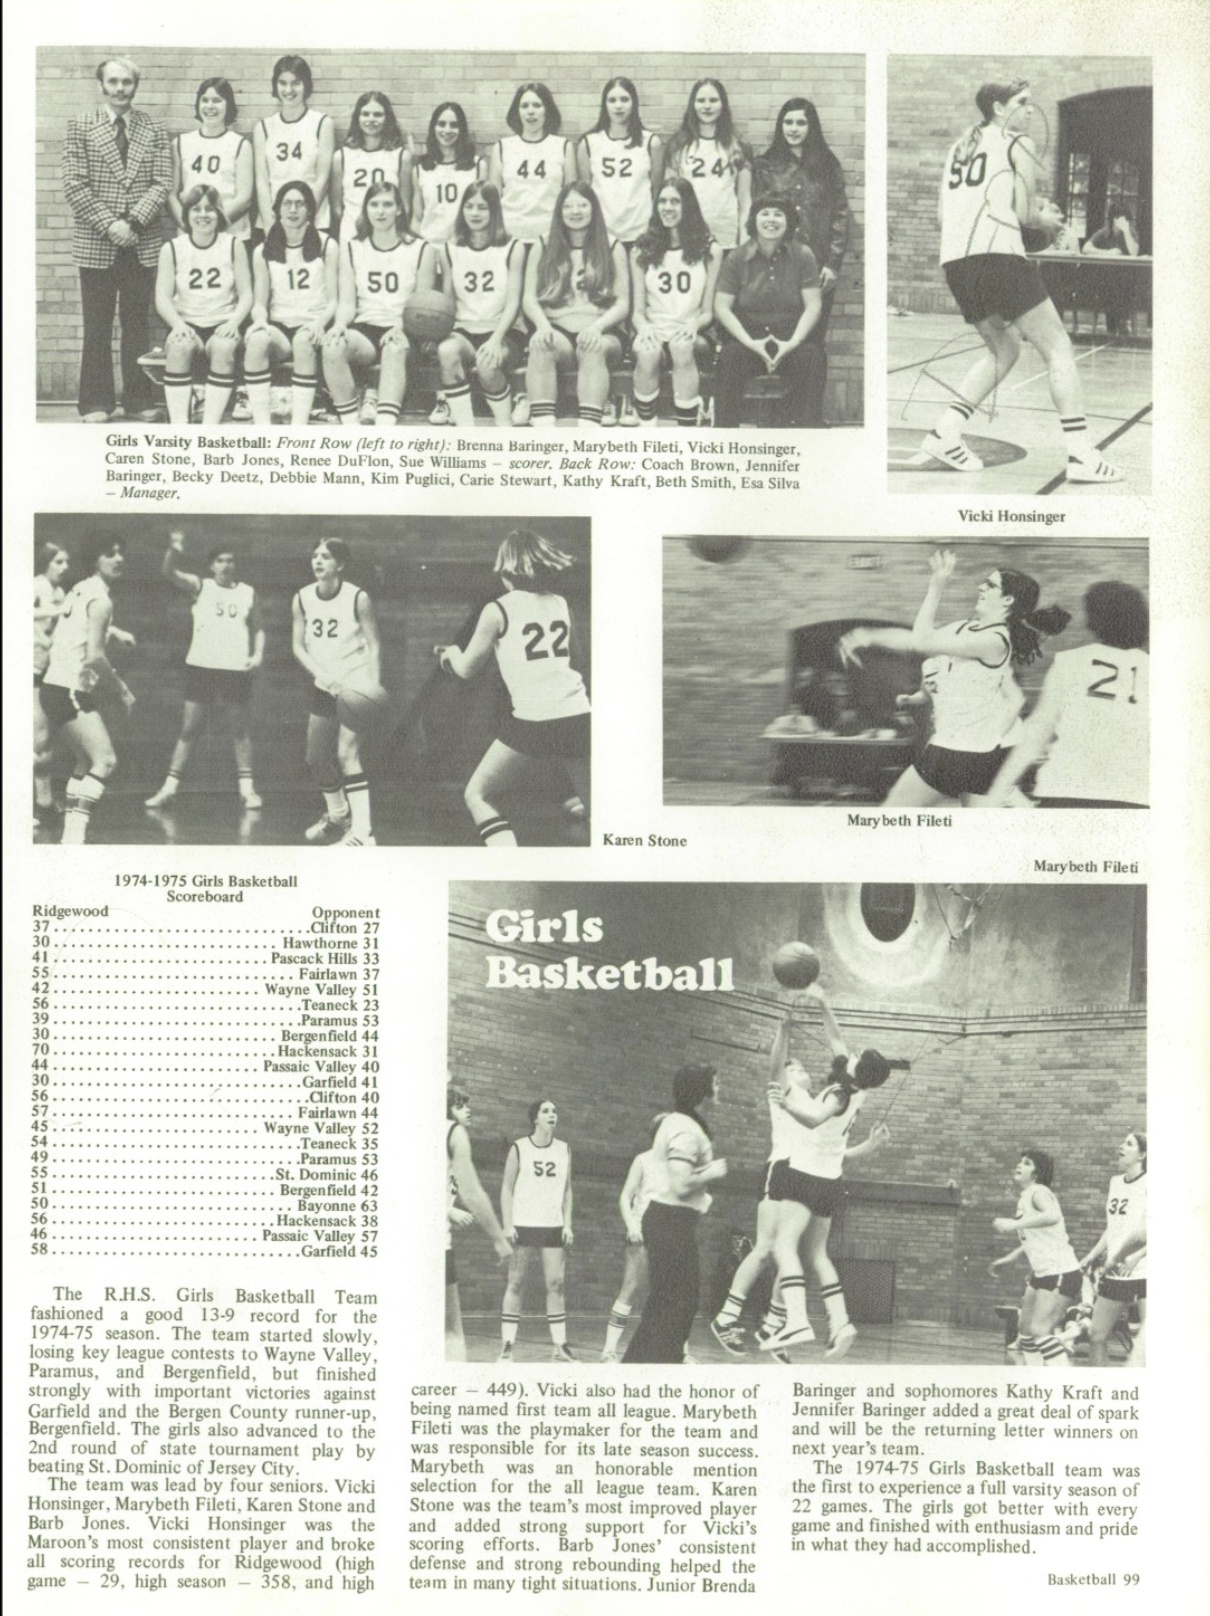 1975 Girls’ Basketball Team